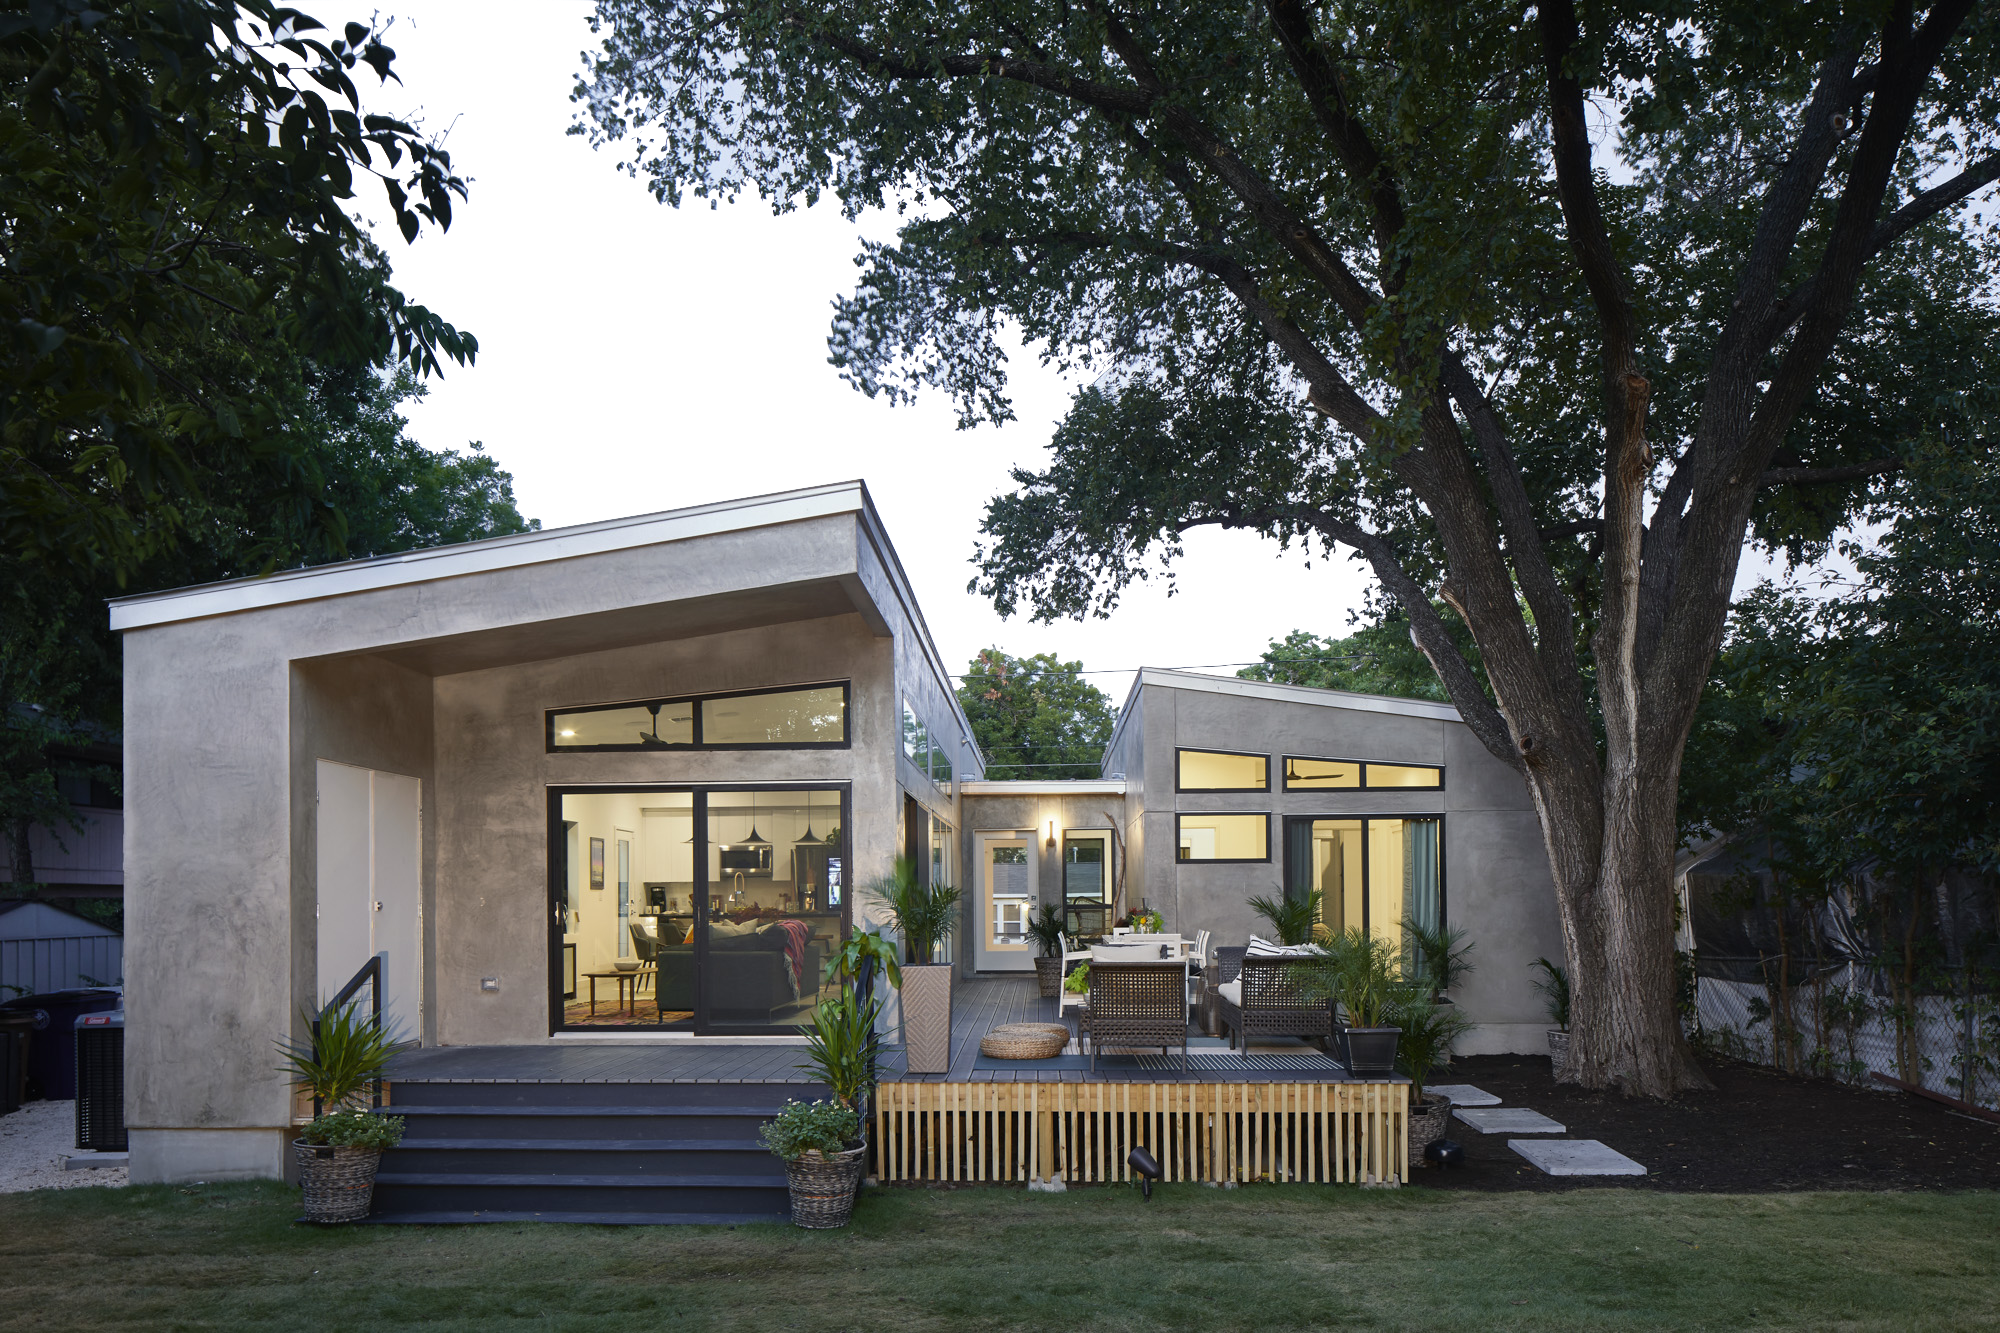 Home-of-the-future-exterior+Smarter-Homes